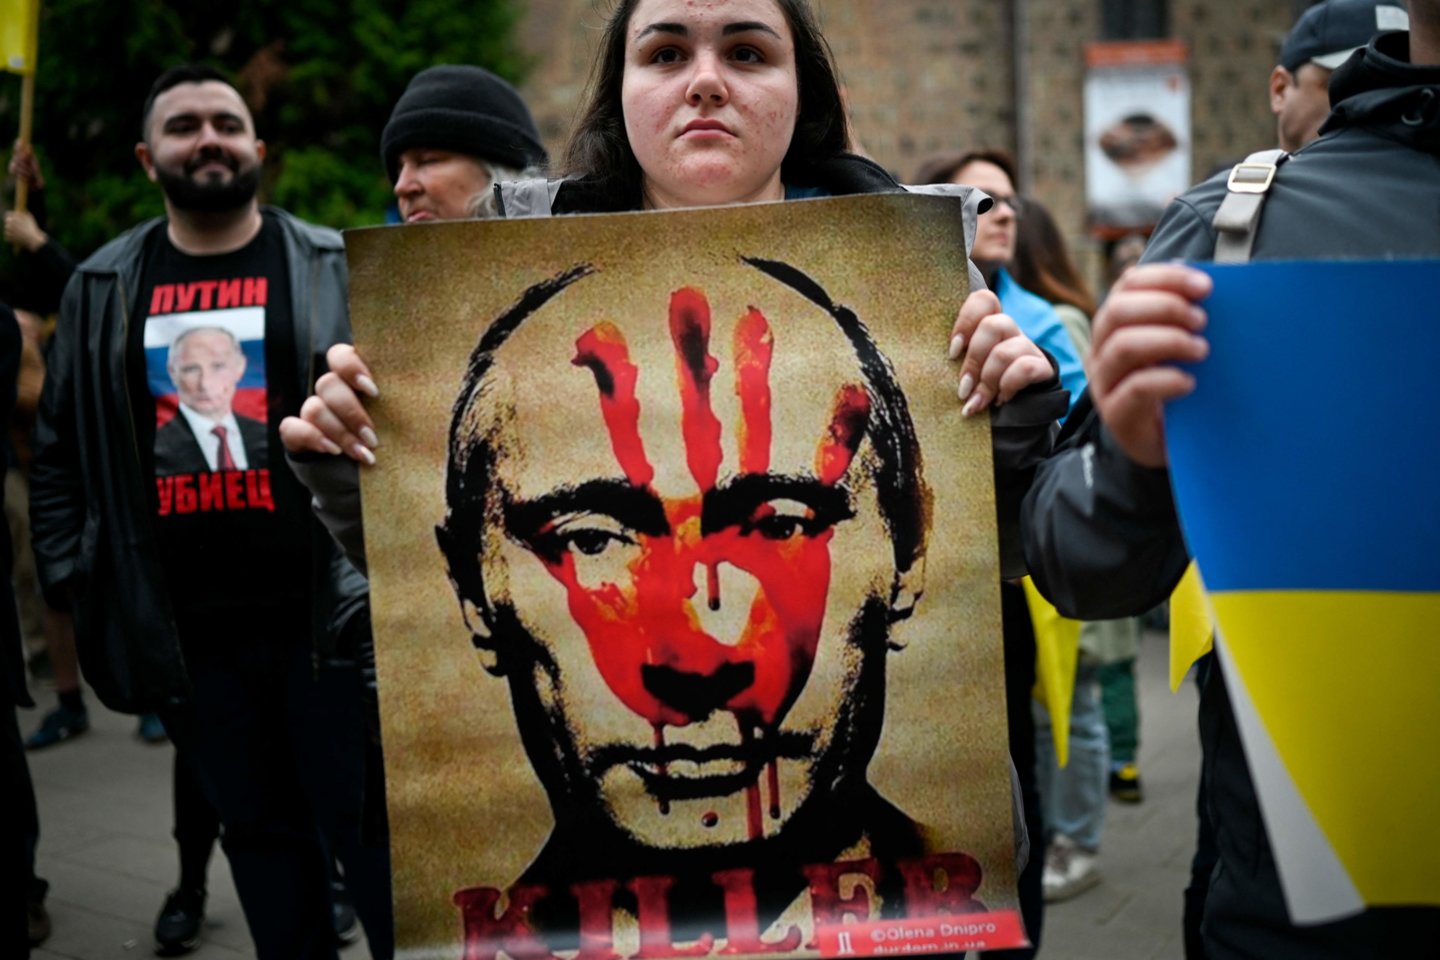  V.Putinas.<br> AFP/Scanpix nuotr.